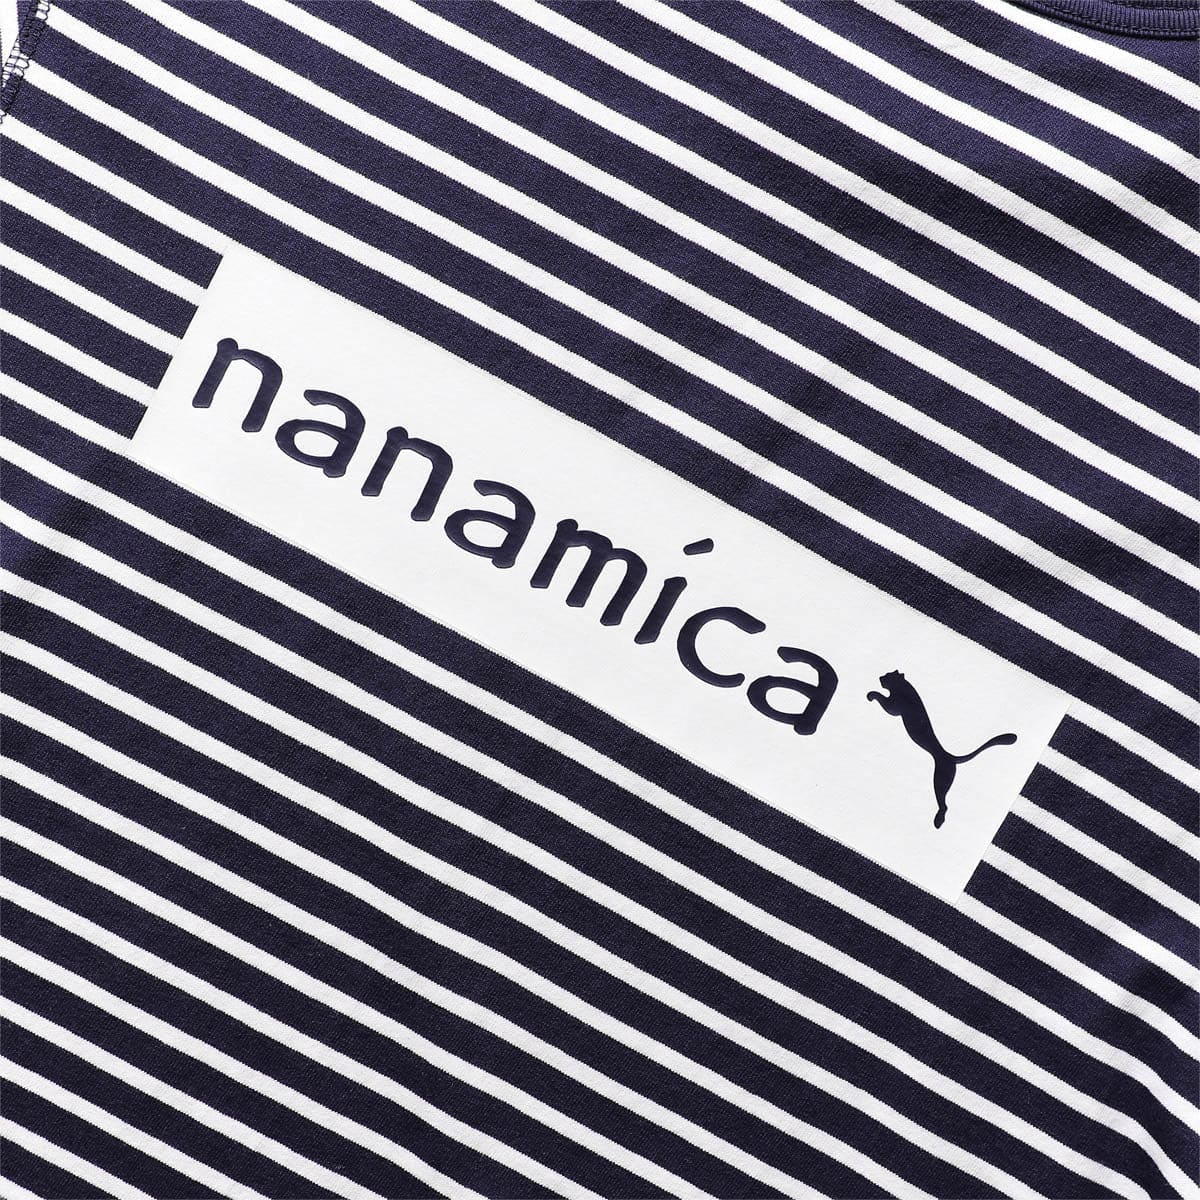 Puma T-Shirts X NANAMICA STRIPED T-SHIRT